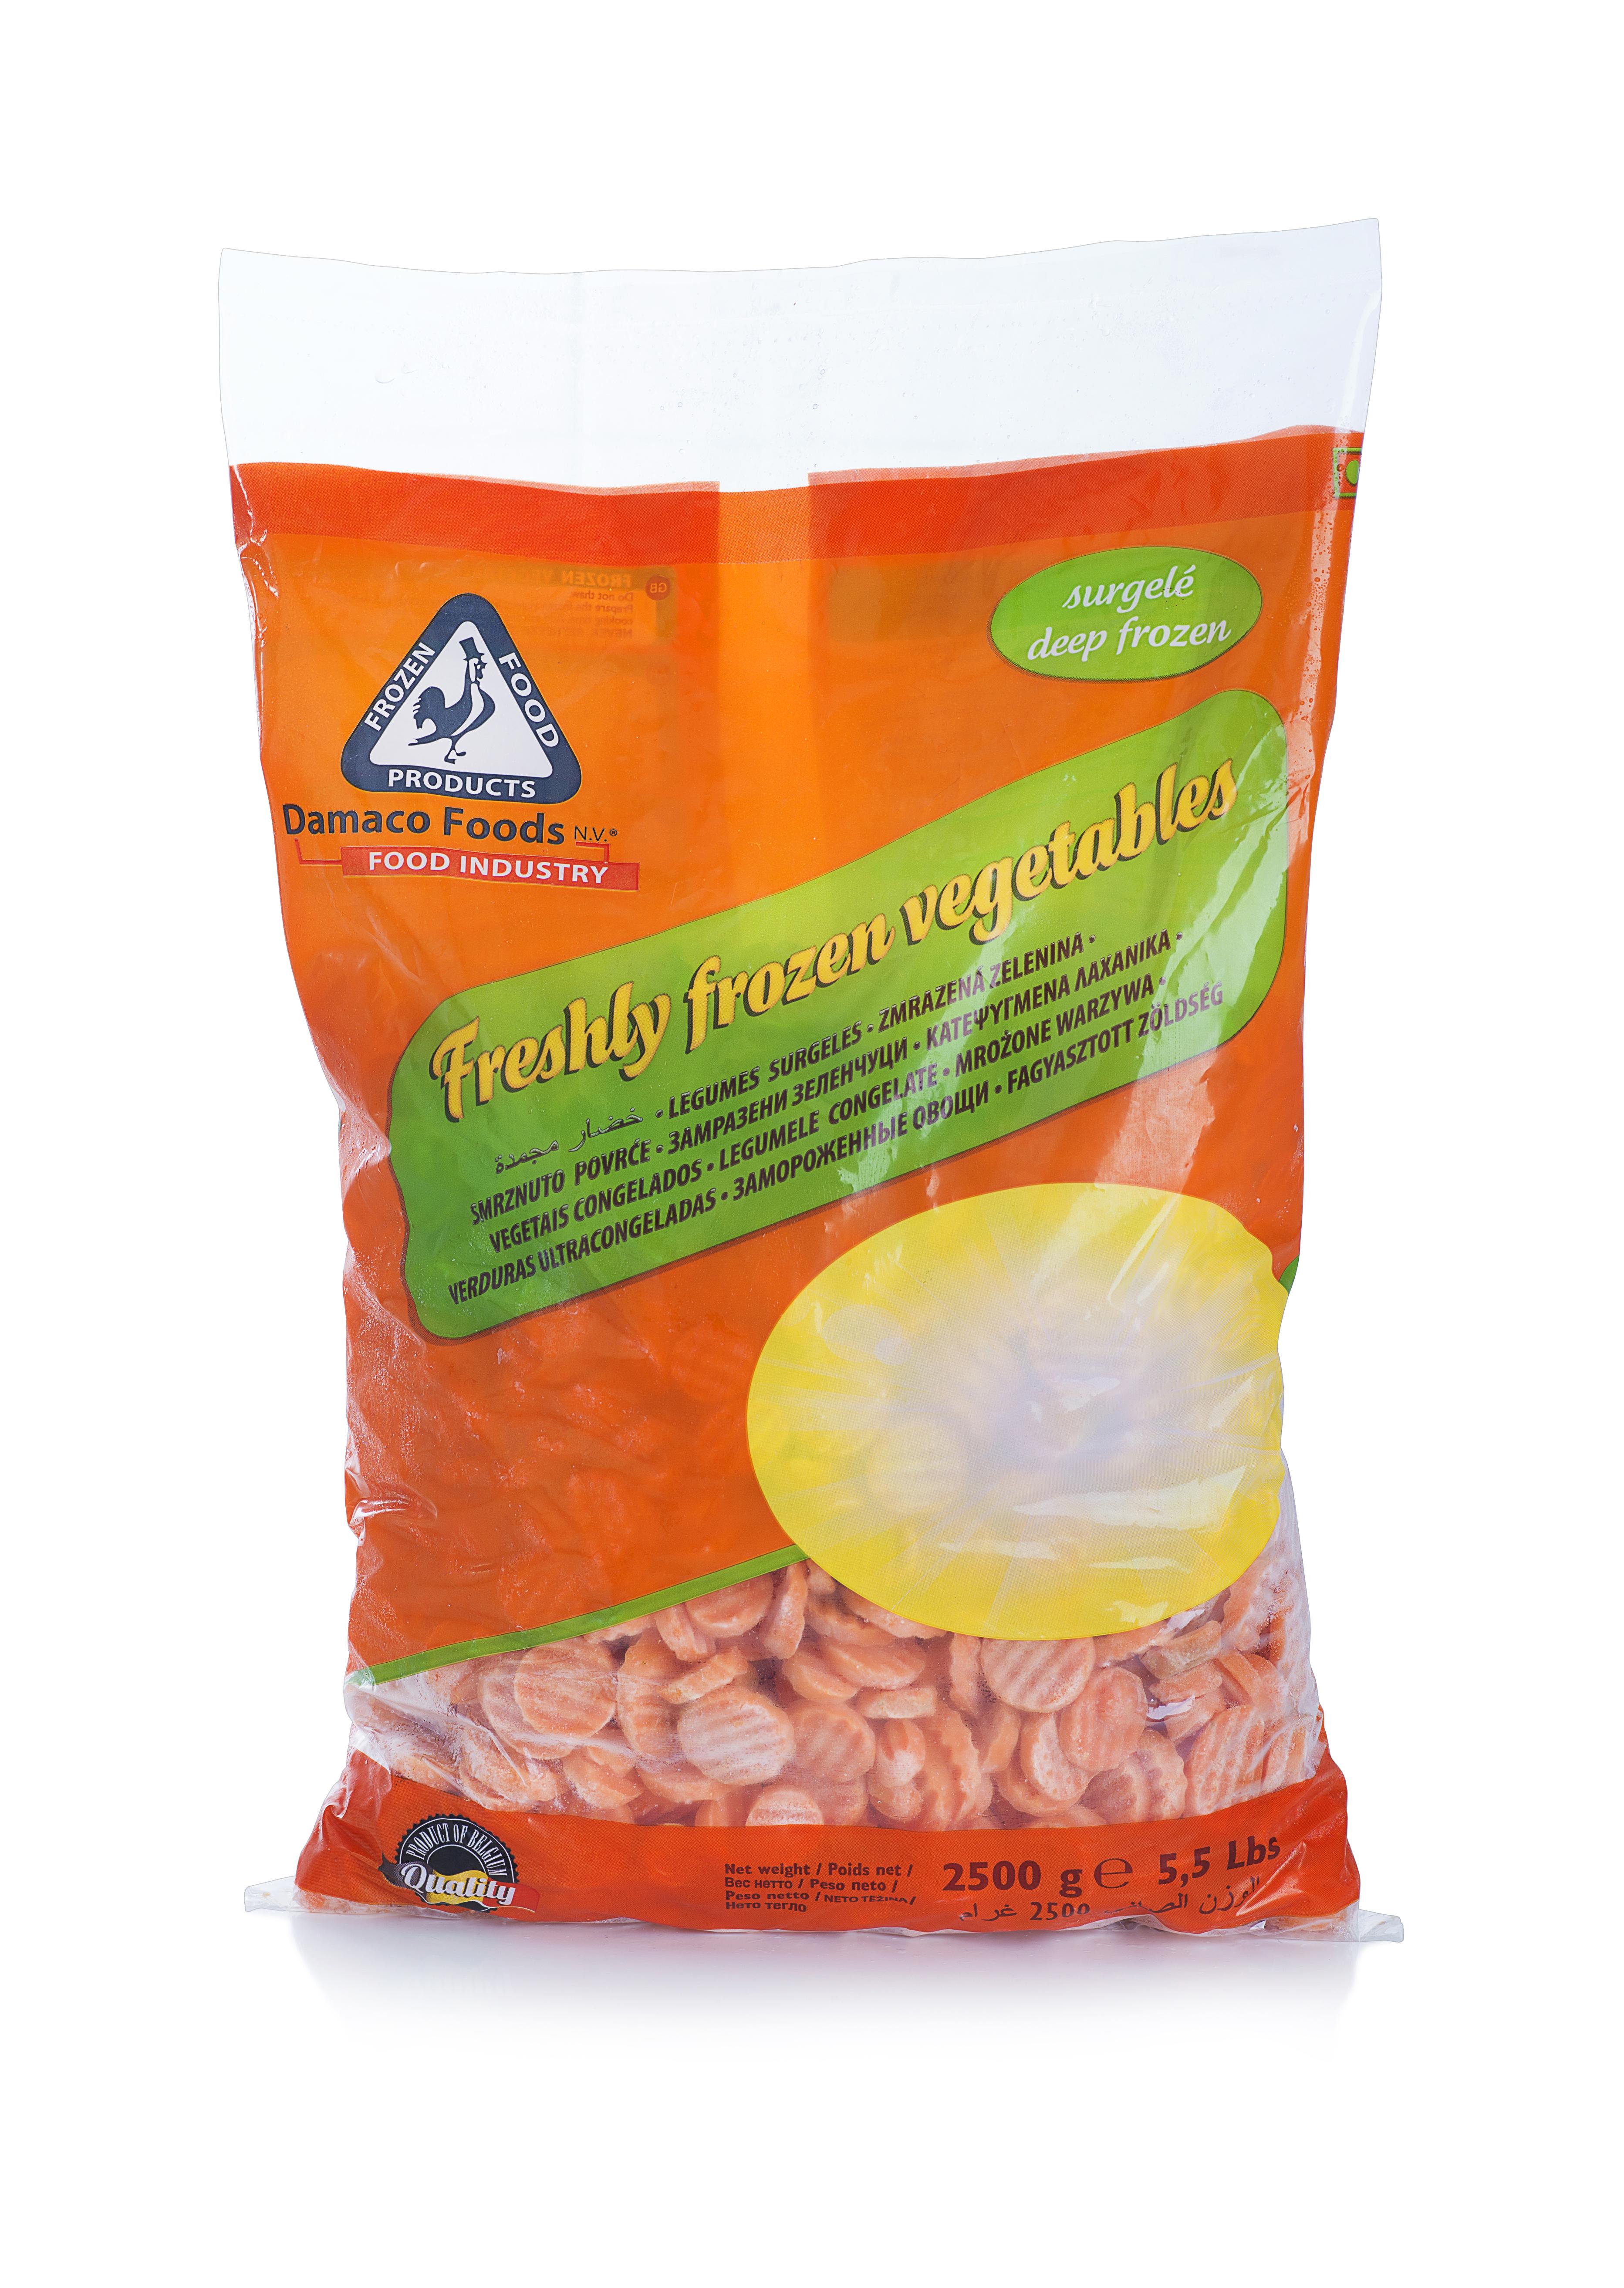 carrot slices damaco brand packaging